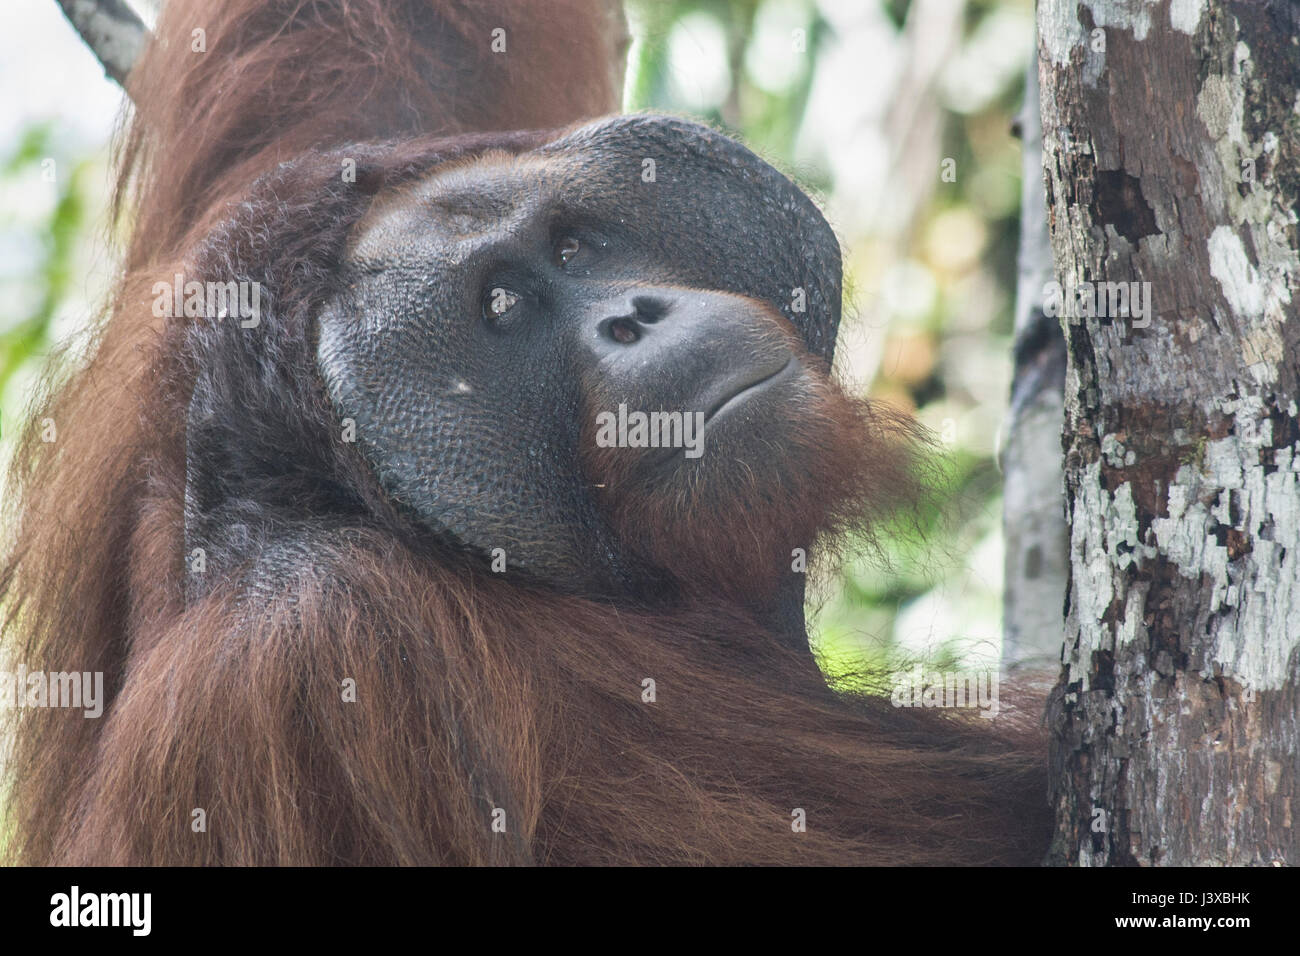 Critically endangered Bornean orangutan (Pongo pygmaeus). Mature males have the characteristic cheek pads. Stock Photo